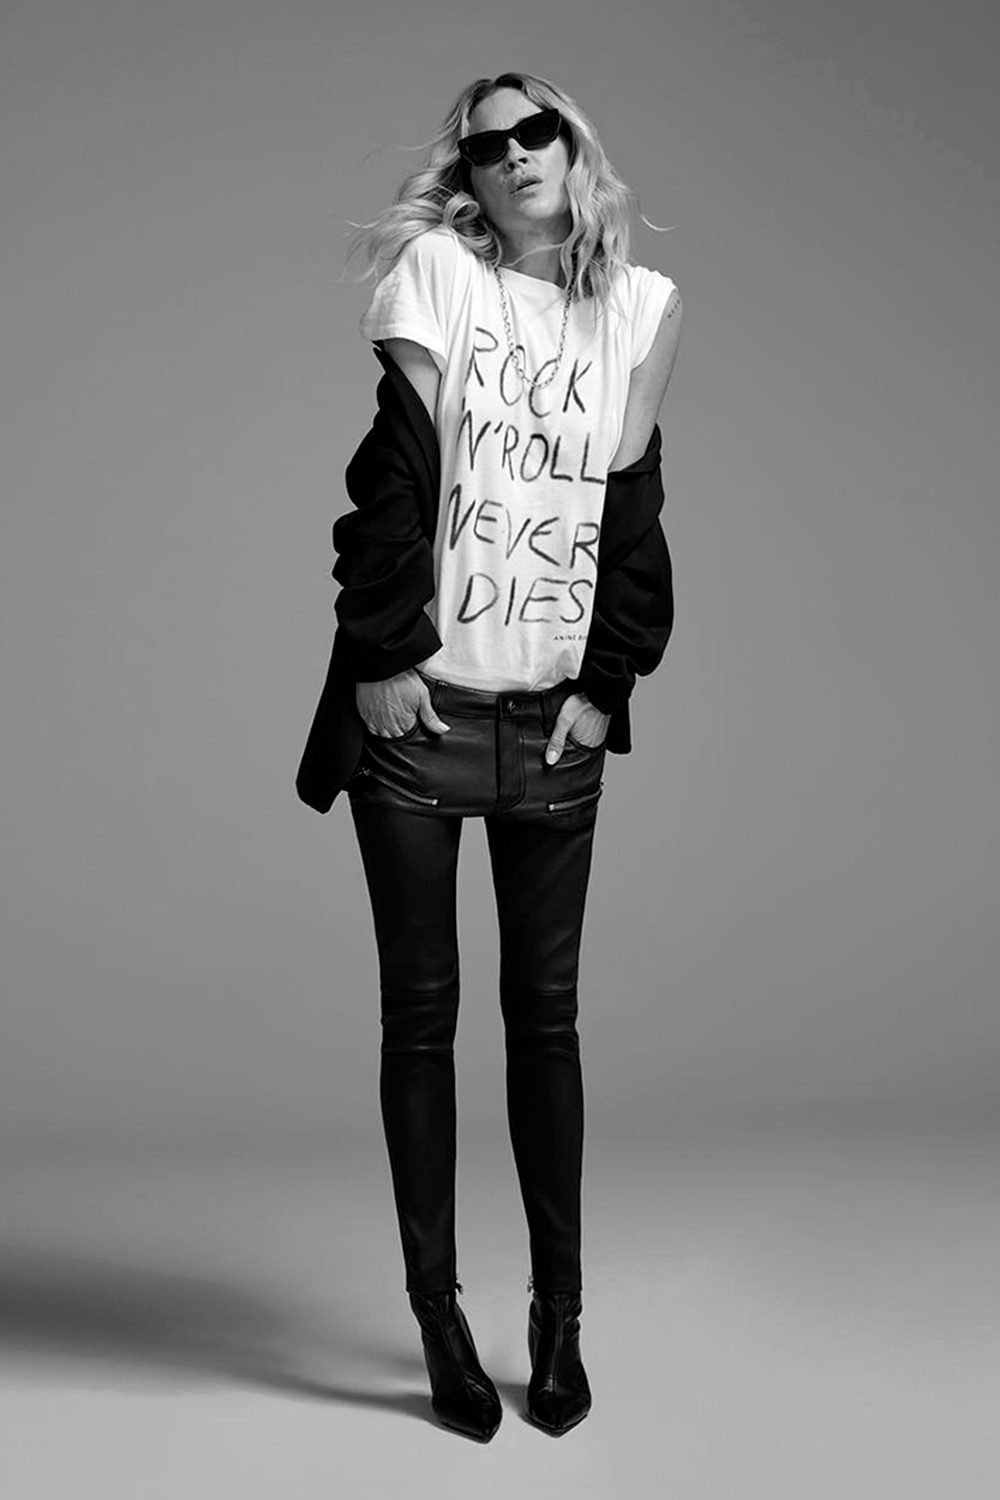 Tee-shirt manches courtes en coton blanc imprimé "Rock'n'Roll Never Dies" écriture noire Walker Rock'n'Roll Anine Bing. Muse Erin Wasson.